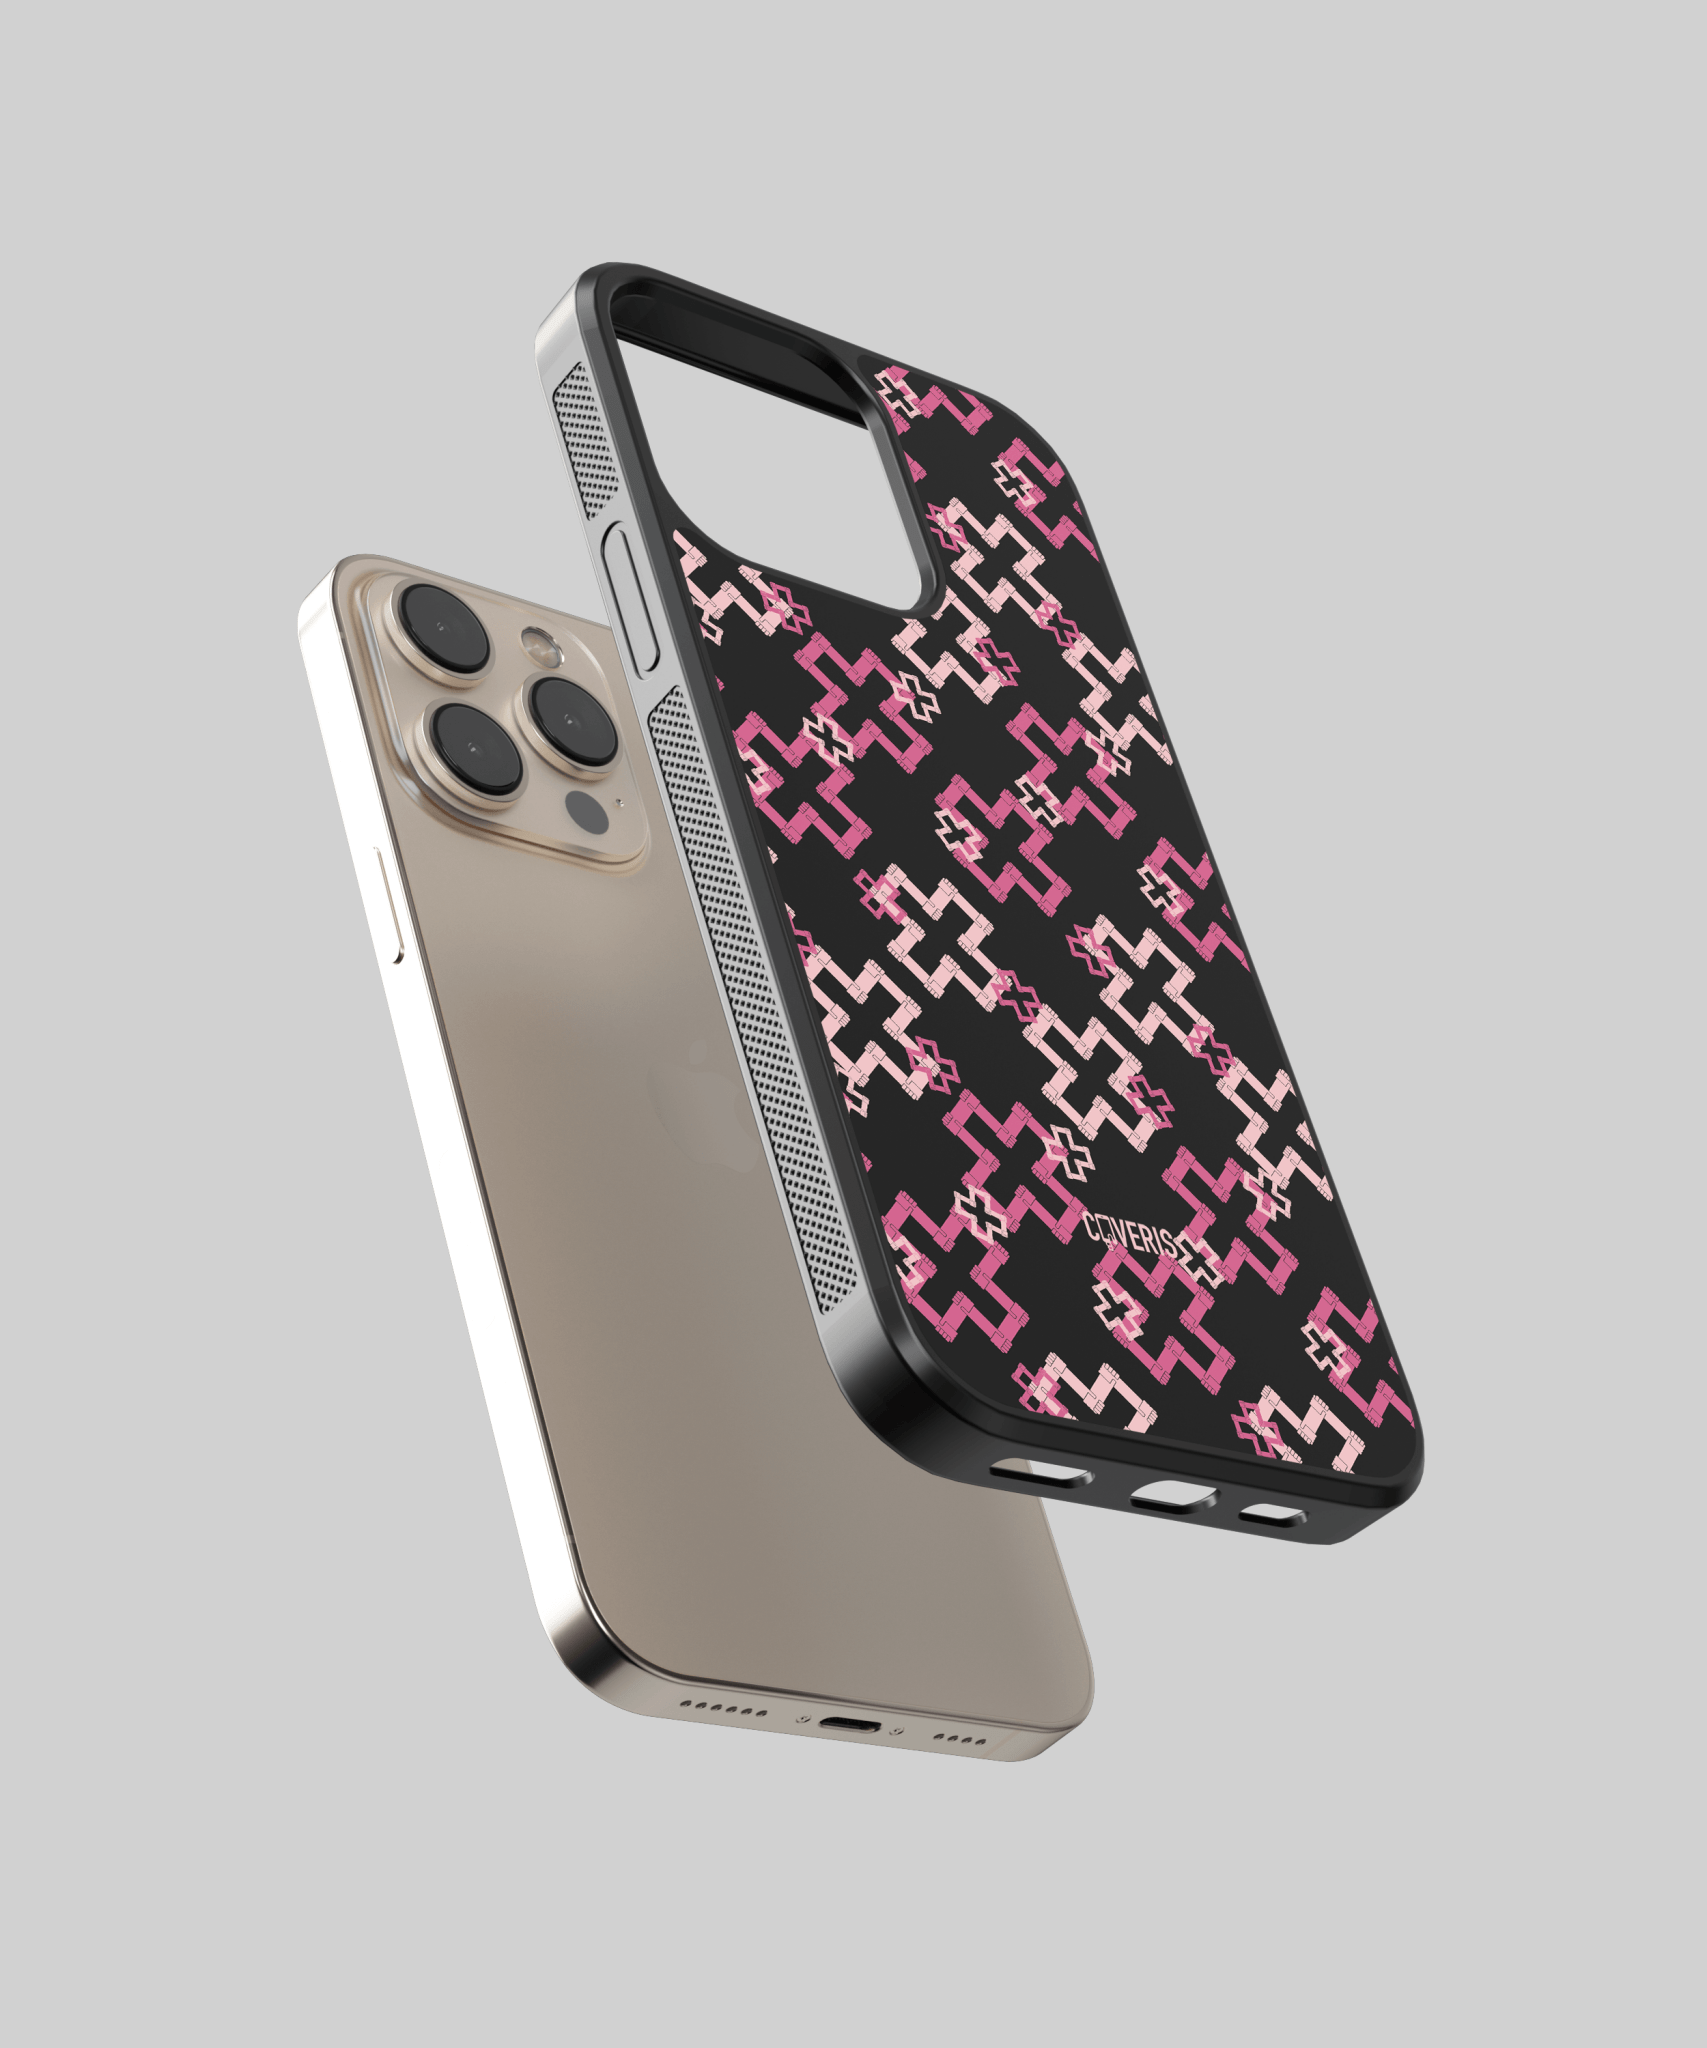 Affection - Huawei P40 lite telefono dėklas - Coveris